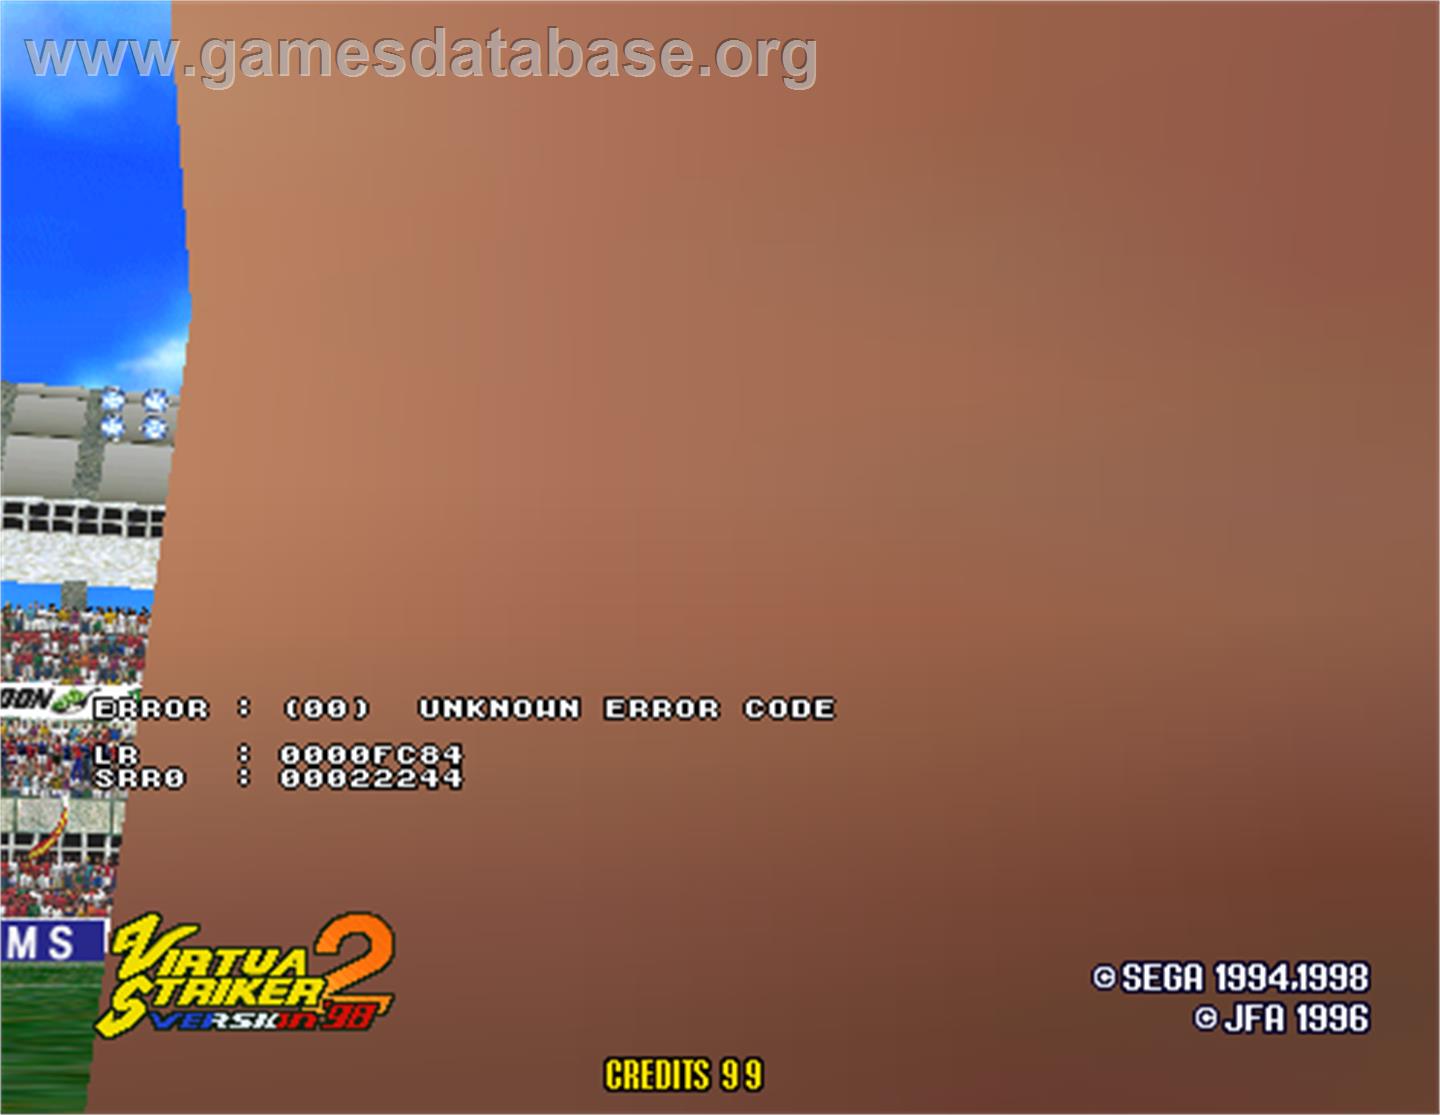 Virtua Striker 2 '98 - Arcade - Artwork - Title Screen